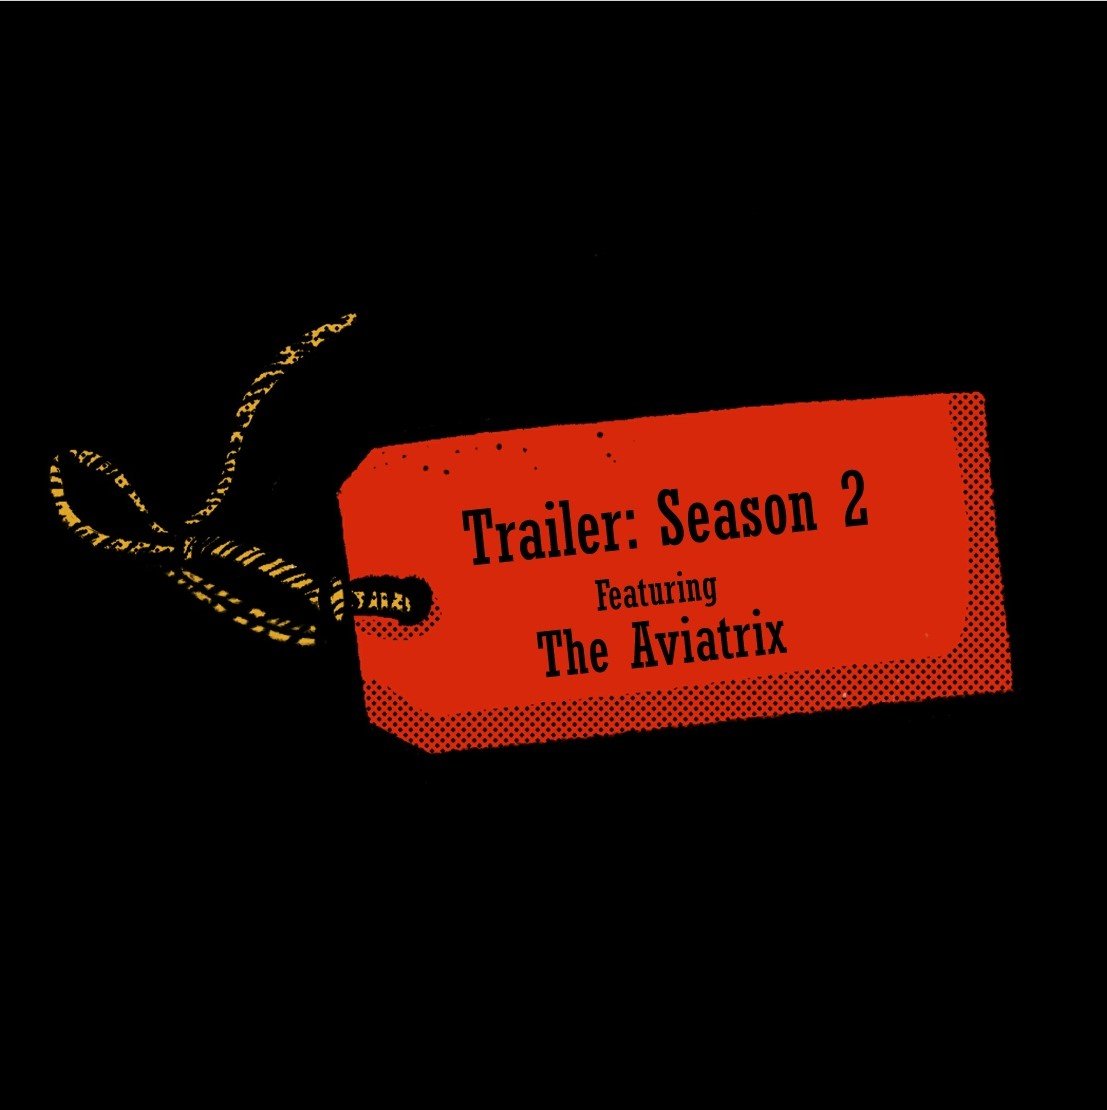 Trailer: Season 2